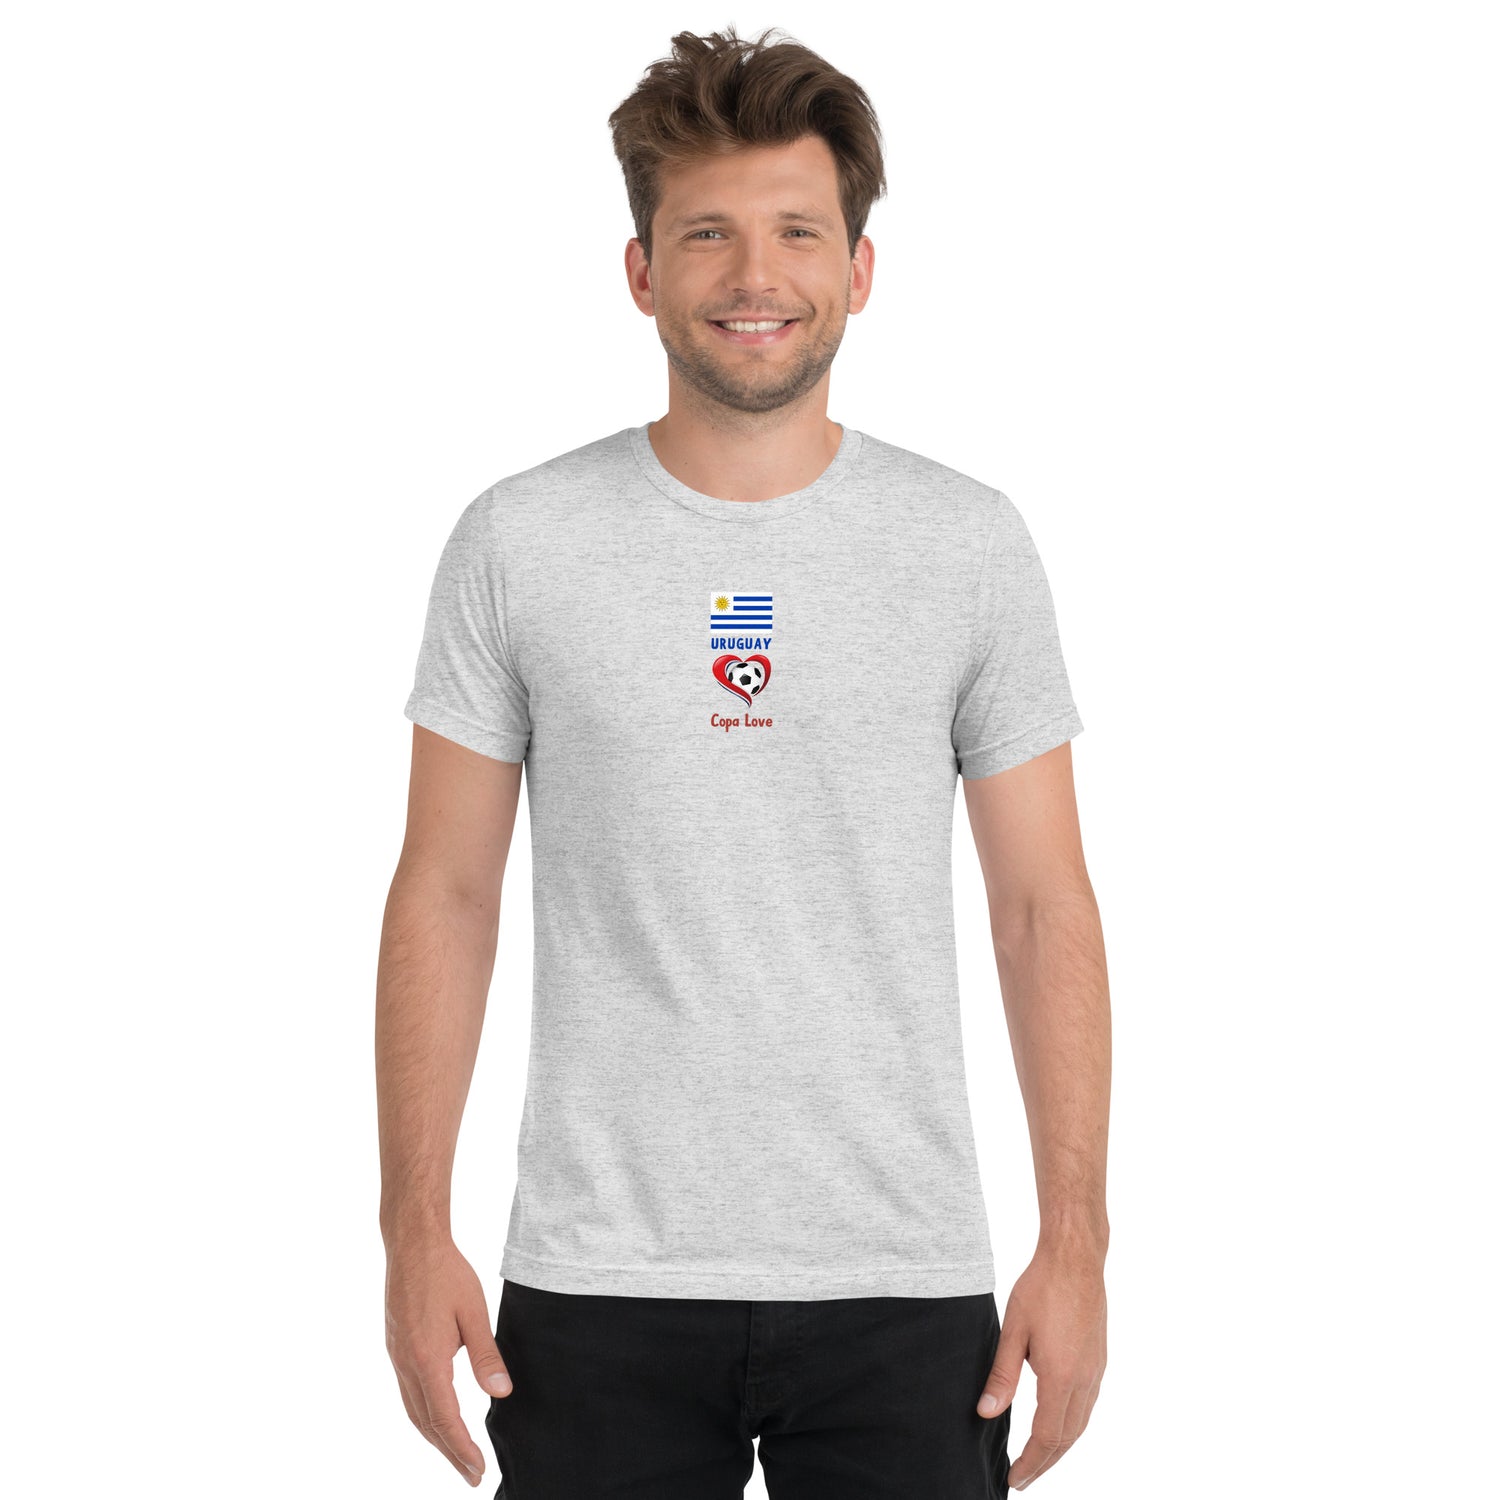 URAGUAY - Copa Love short sleeve t-shirt